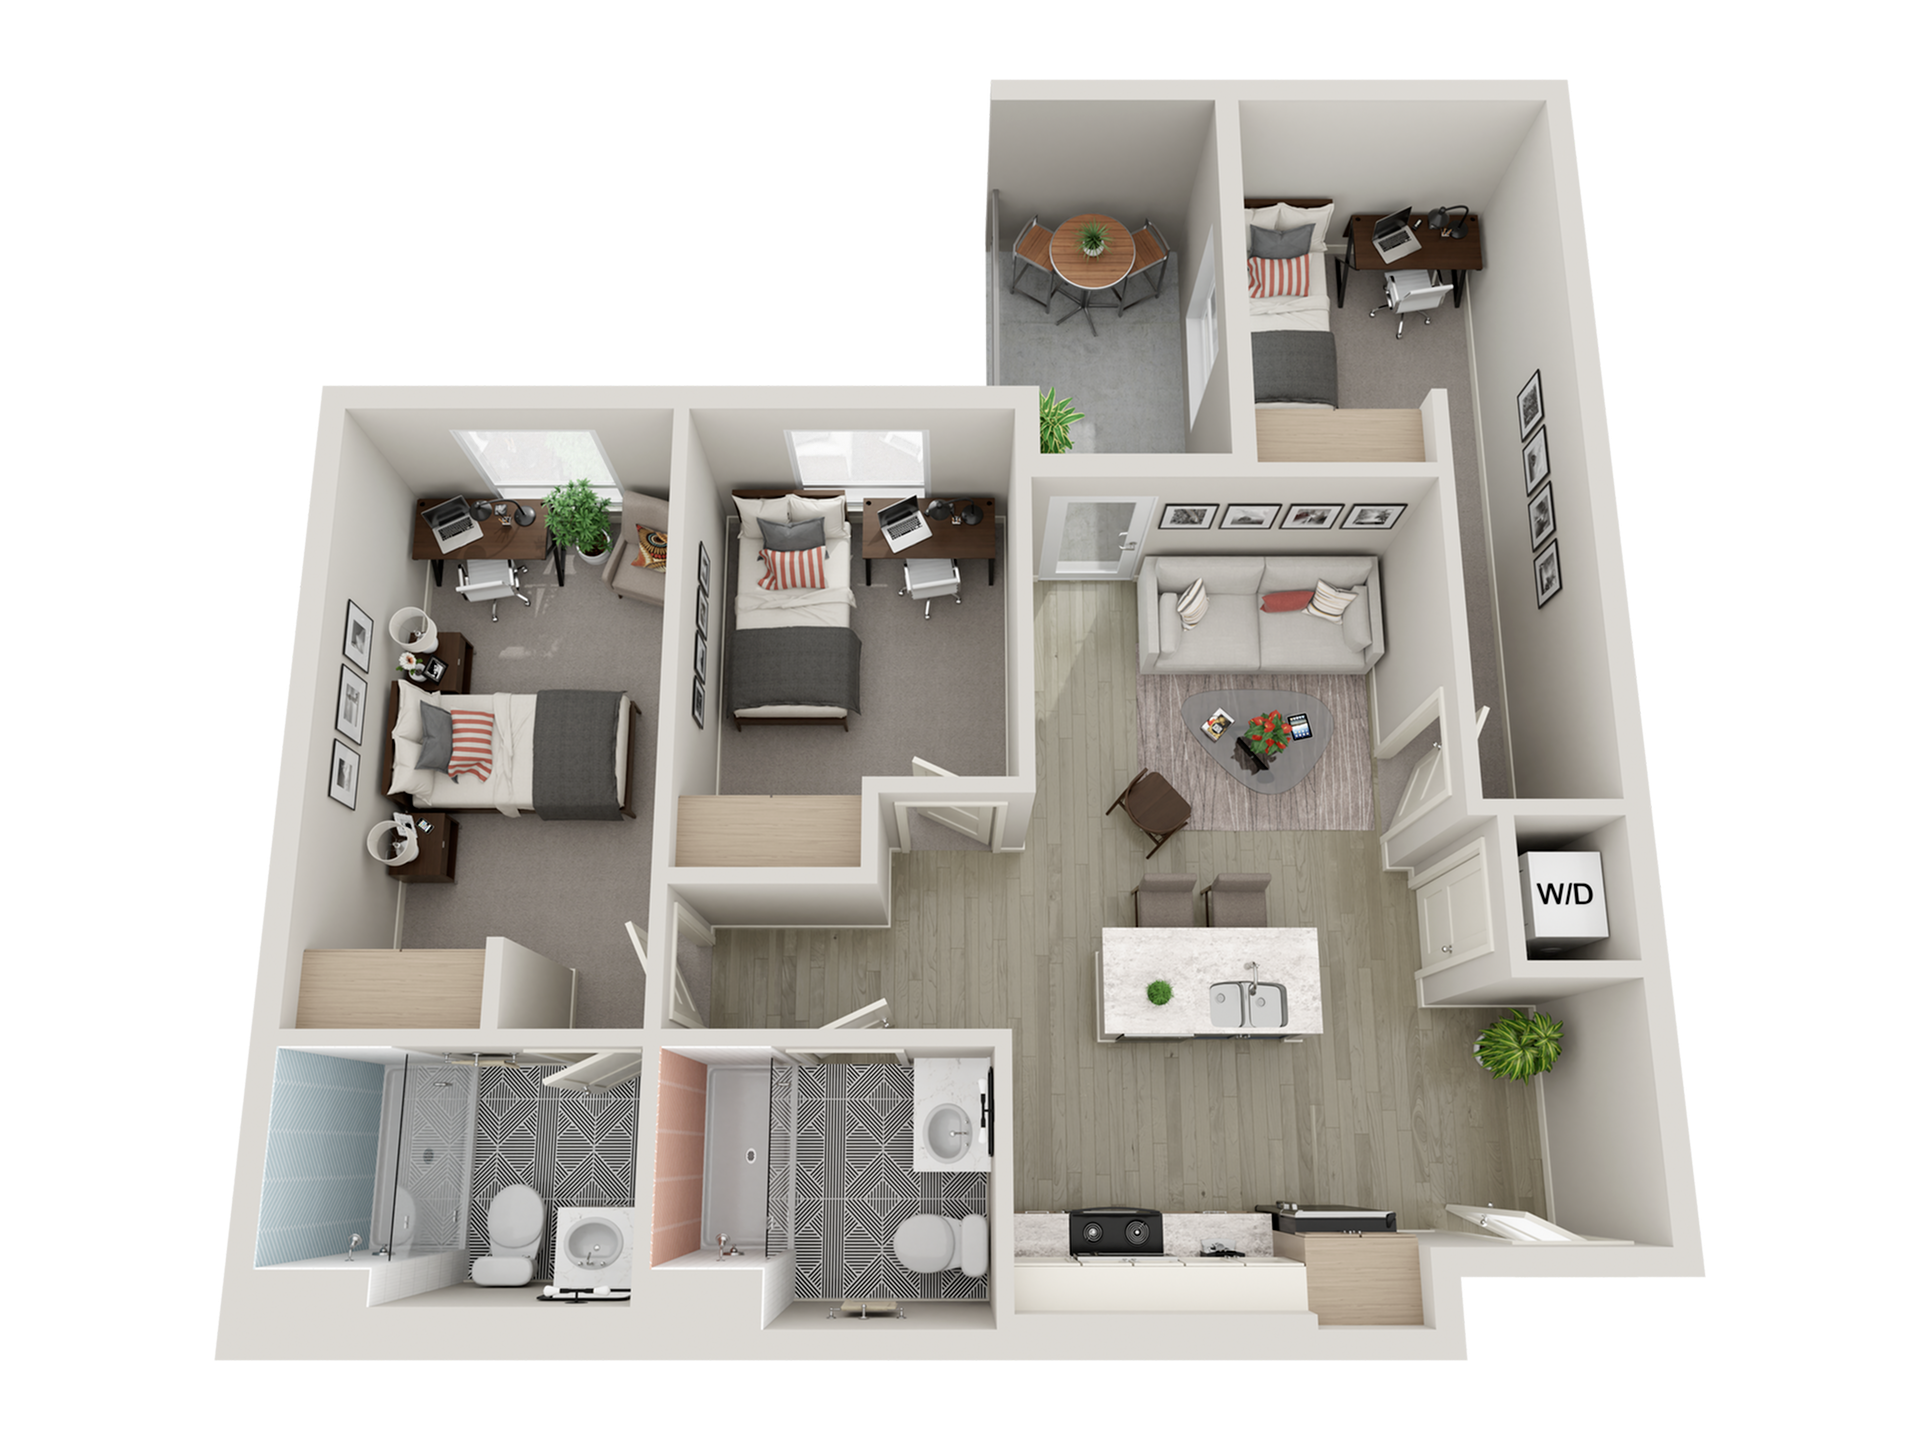 3-bedroom floorplan with beds and desks, kitchen, outdoor patio, 2 bathrooms, and washer dryer.